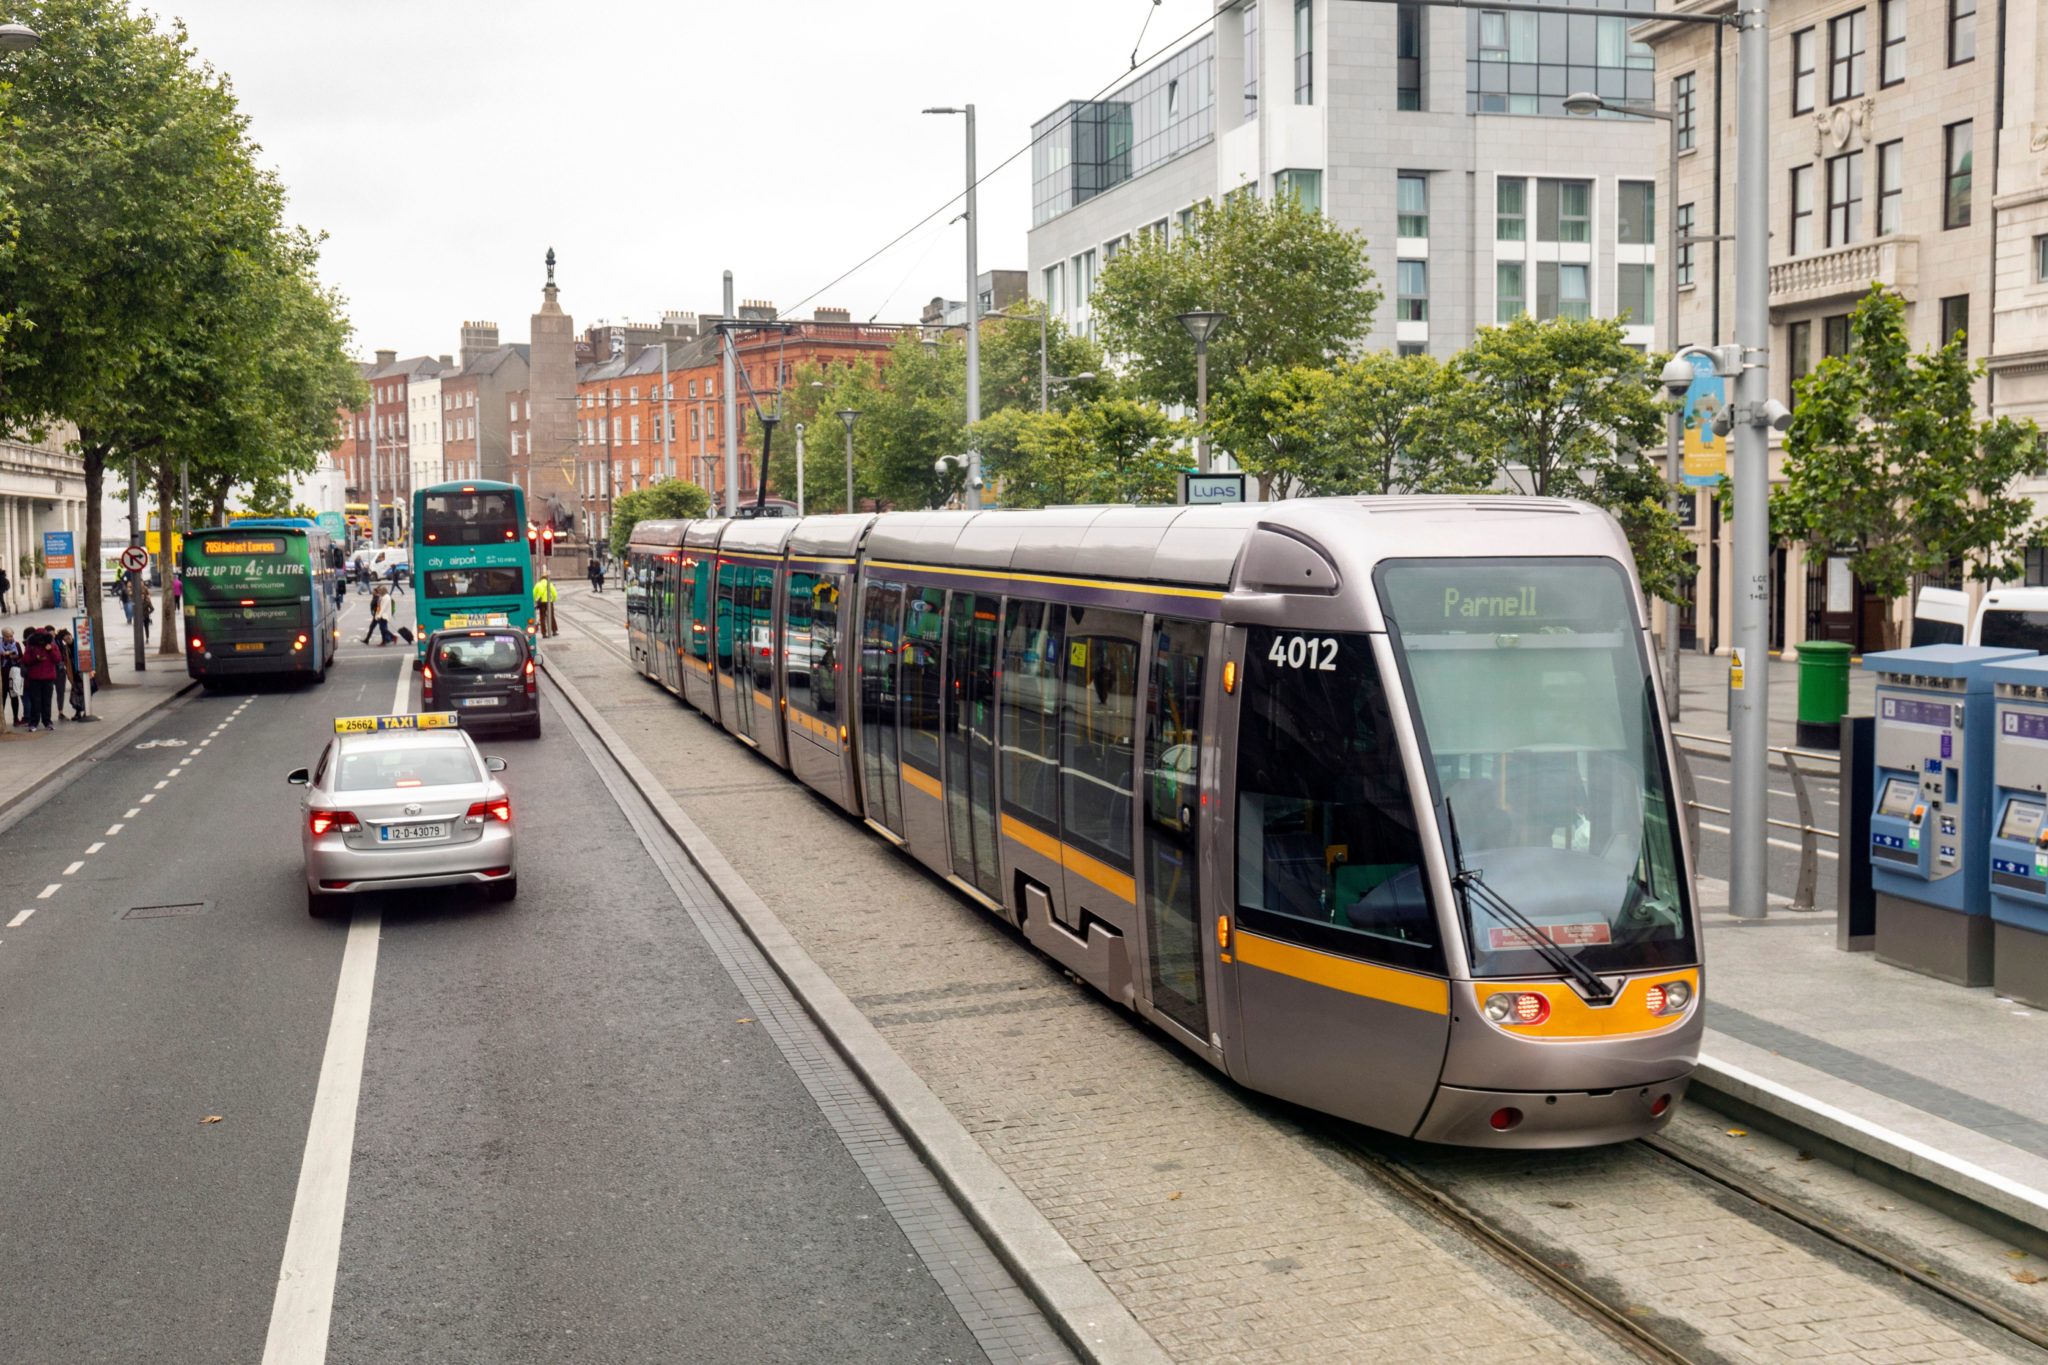 A Luas tram on Dublin's O'Connell Street, 13-9-19